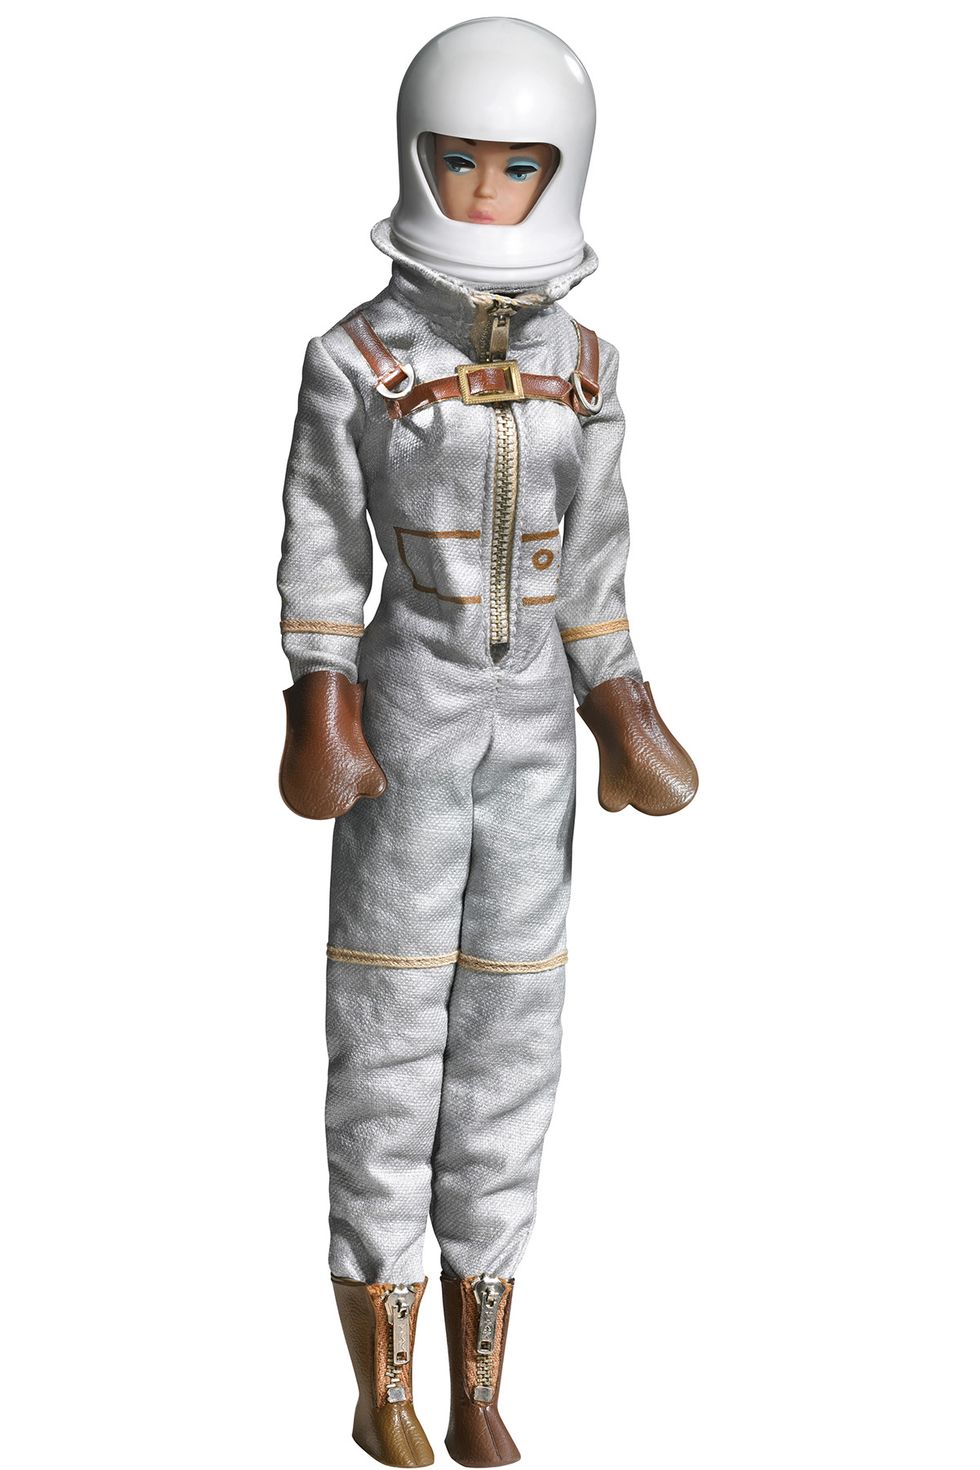 barbie astronaut